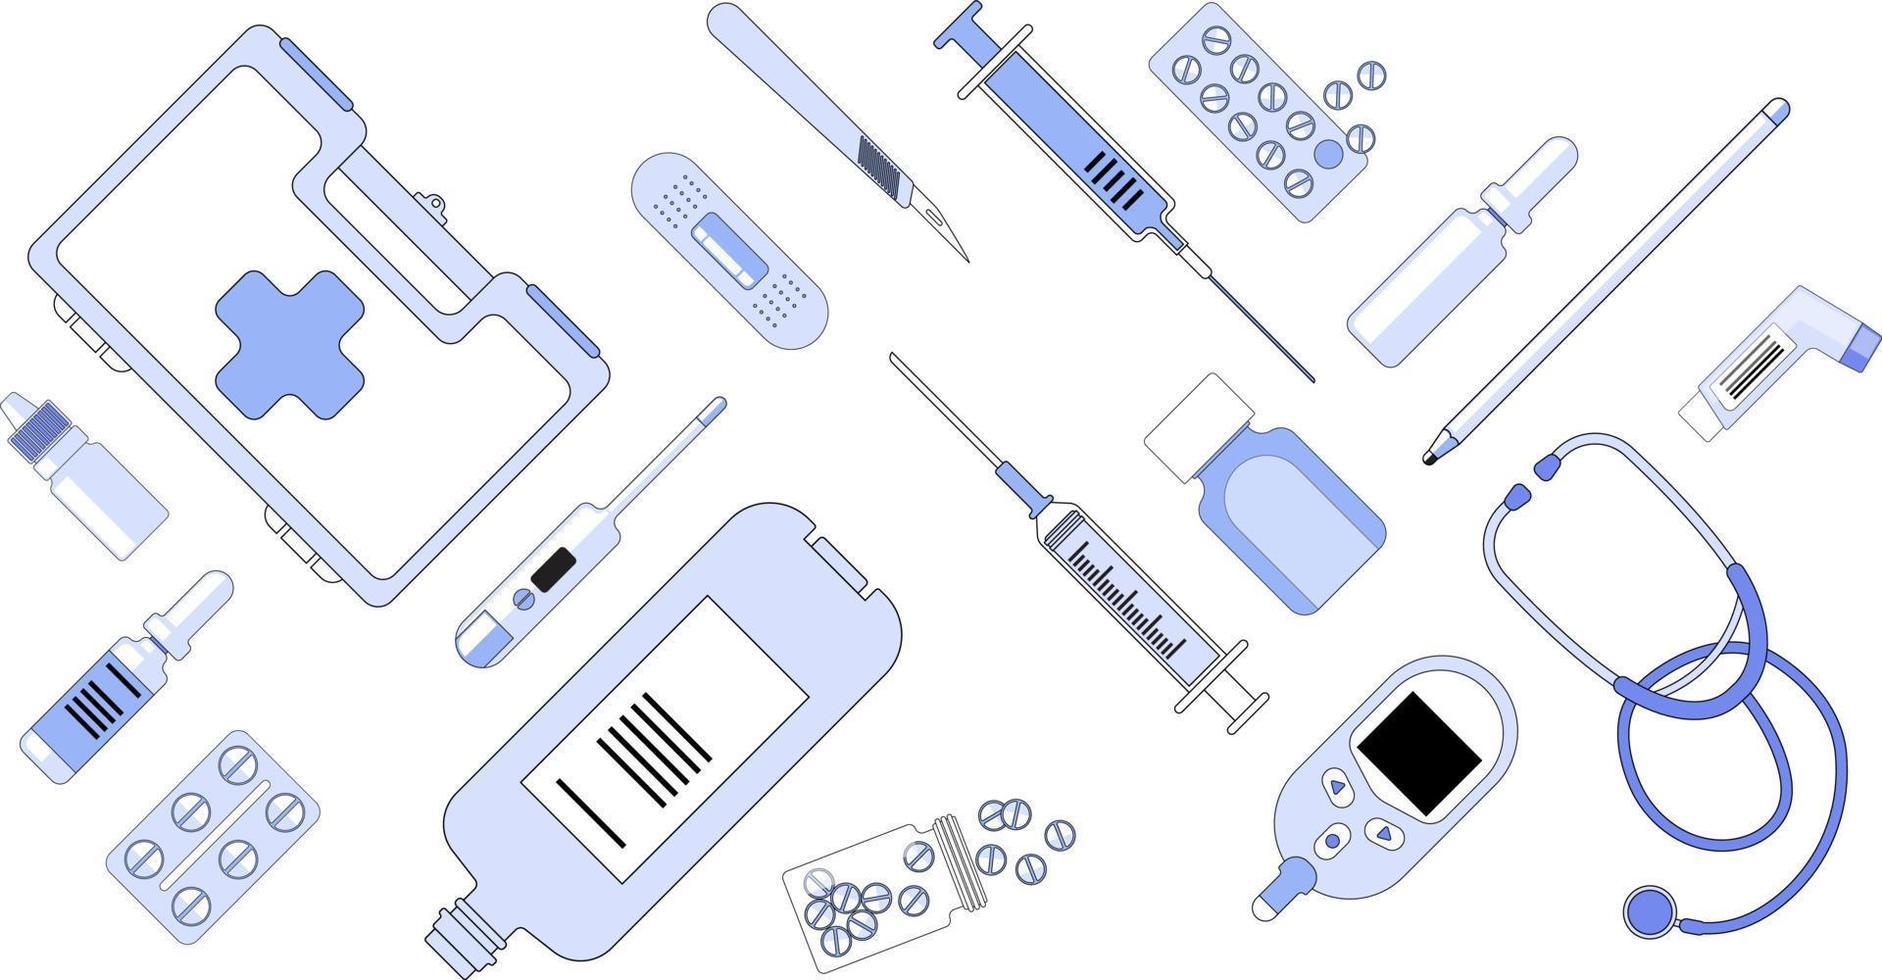 medical equipment flat design  vector illustrations